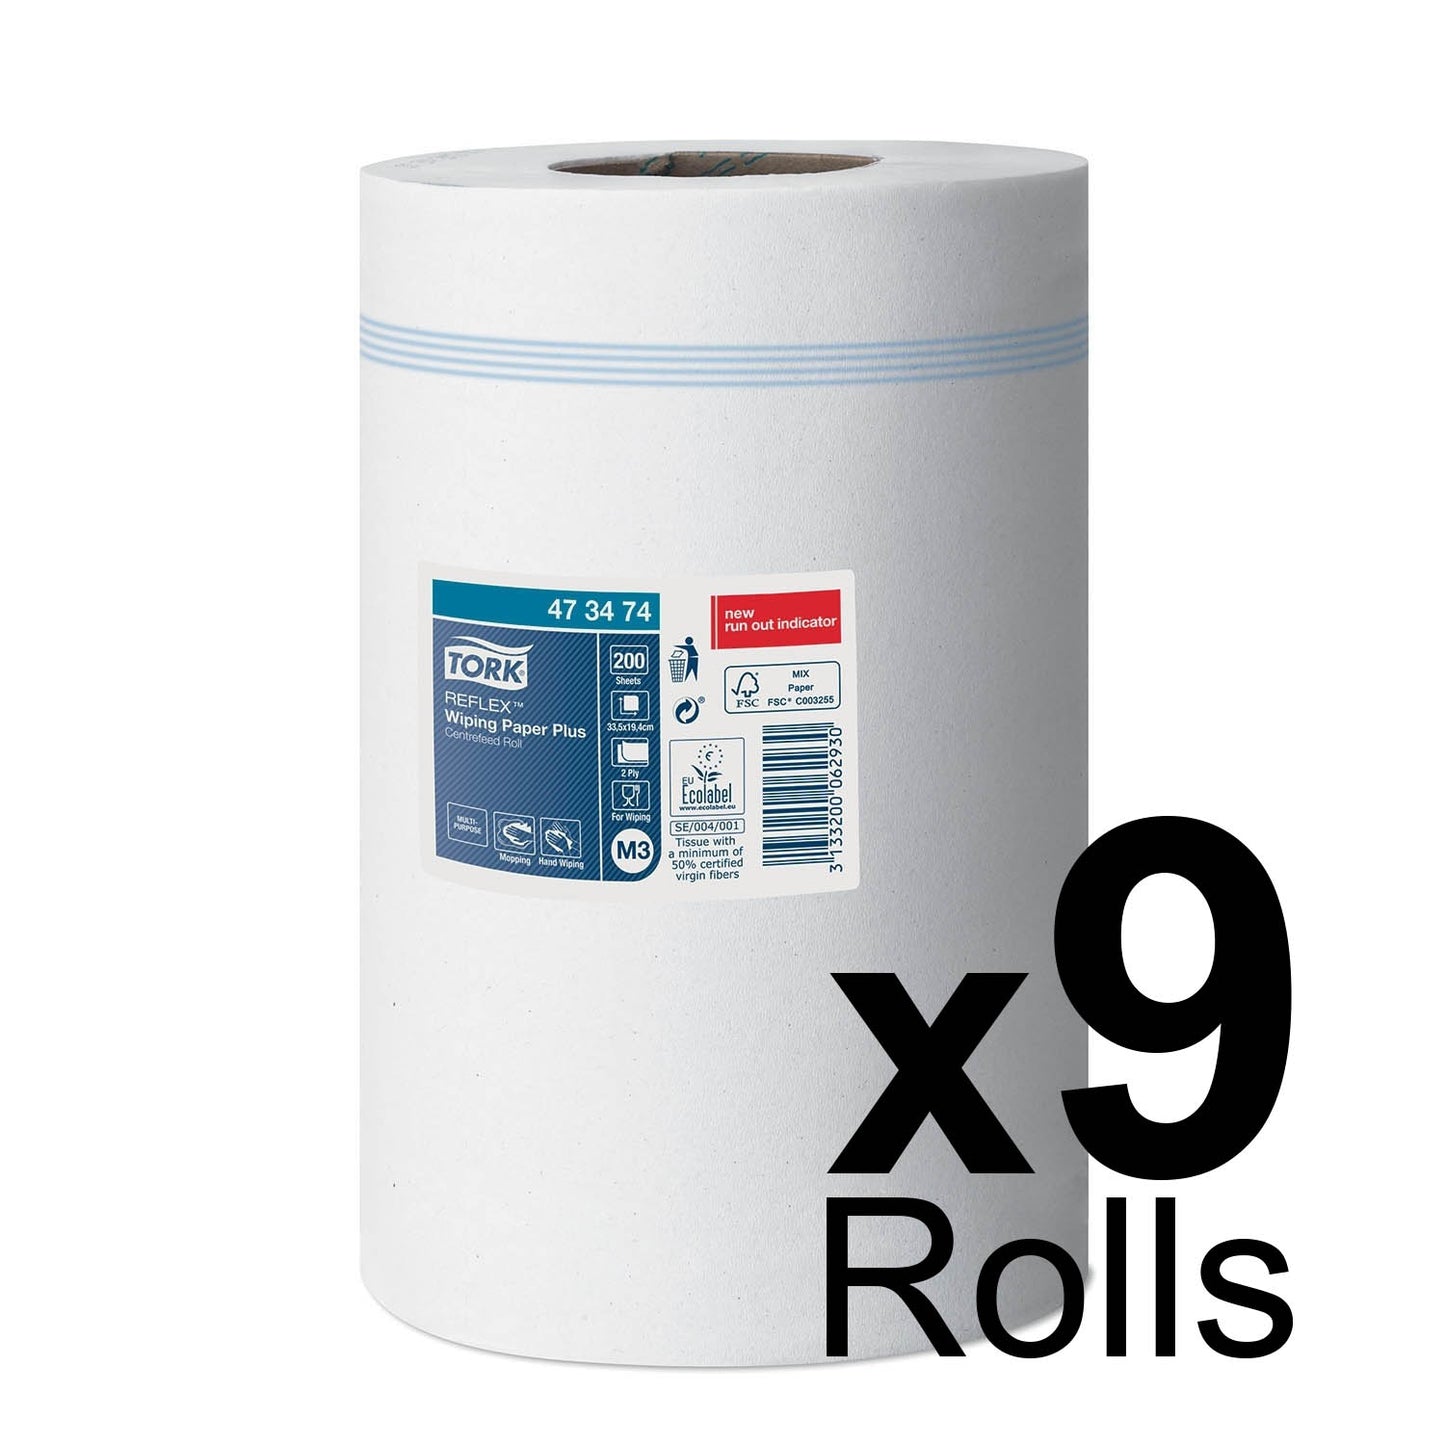 Tork Reflex Centrefeed Roll White 2ply - Case of 9 Rolls - 19.4cm x 67m